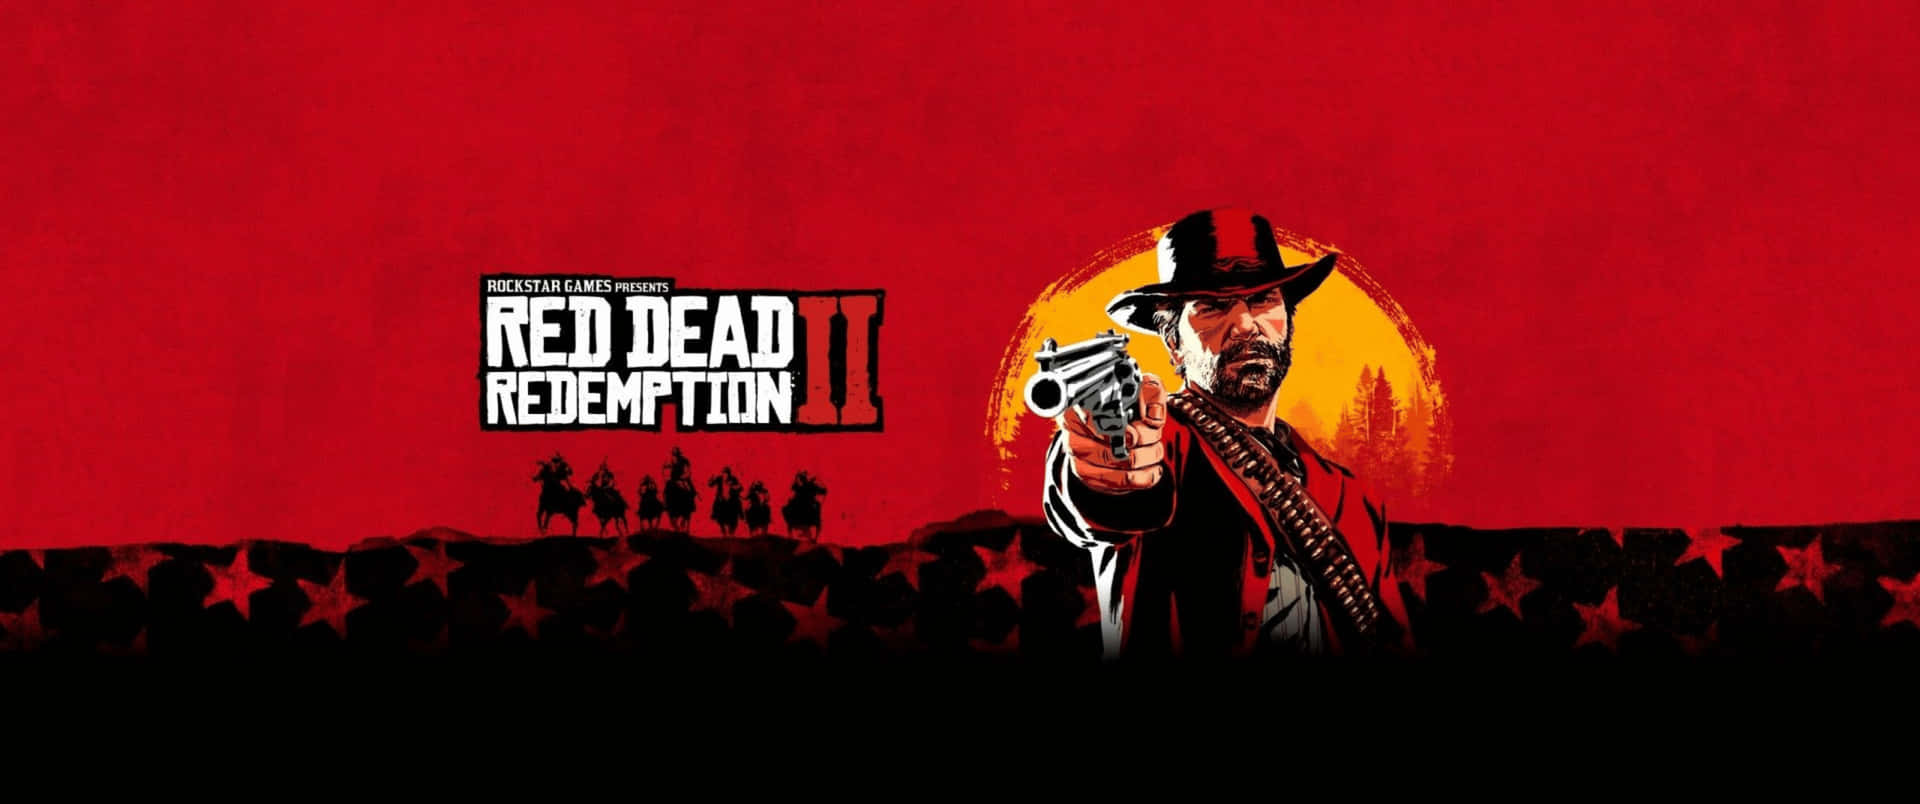 3440x1440p Red Dead Redemption 2 Background Wallpaper